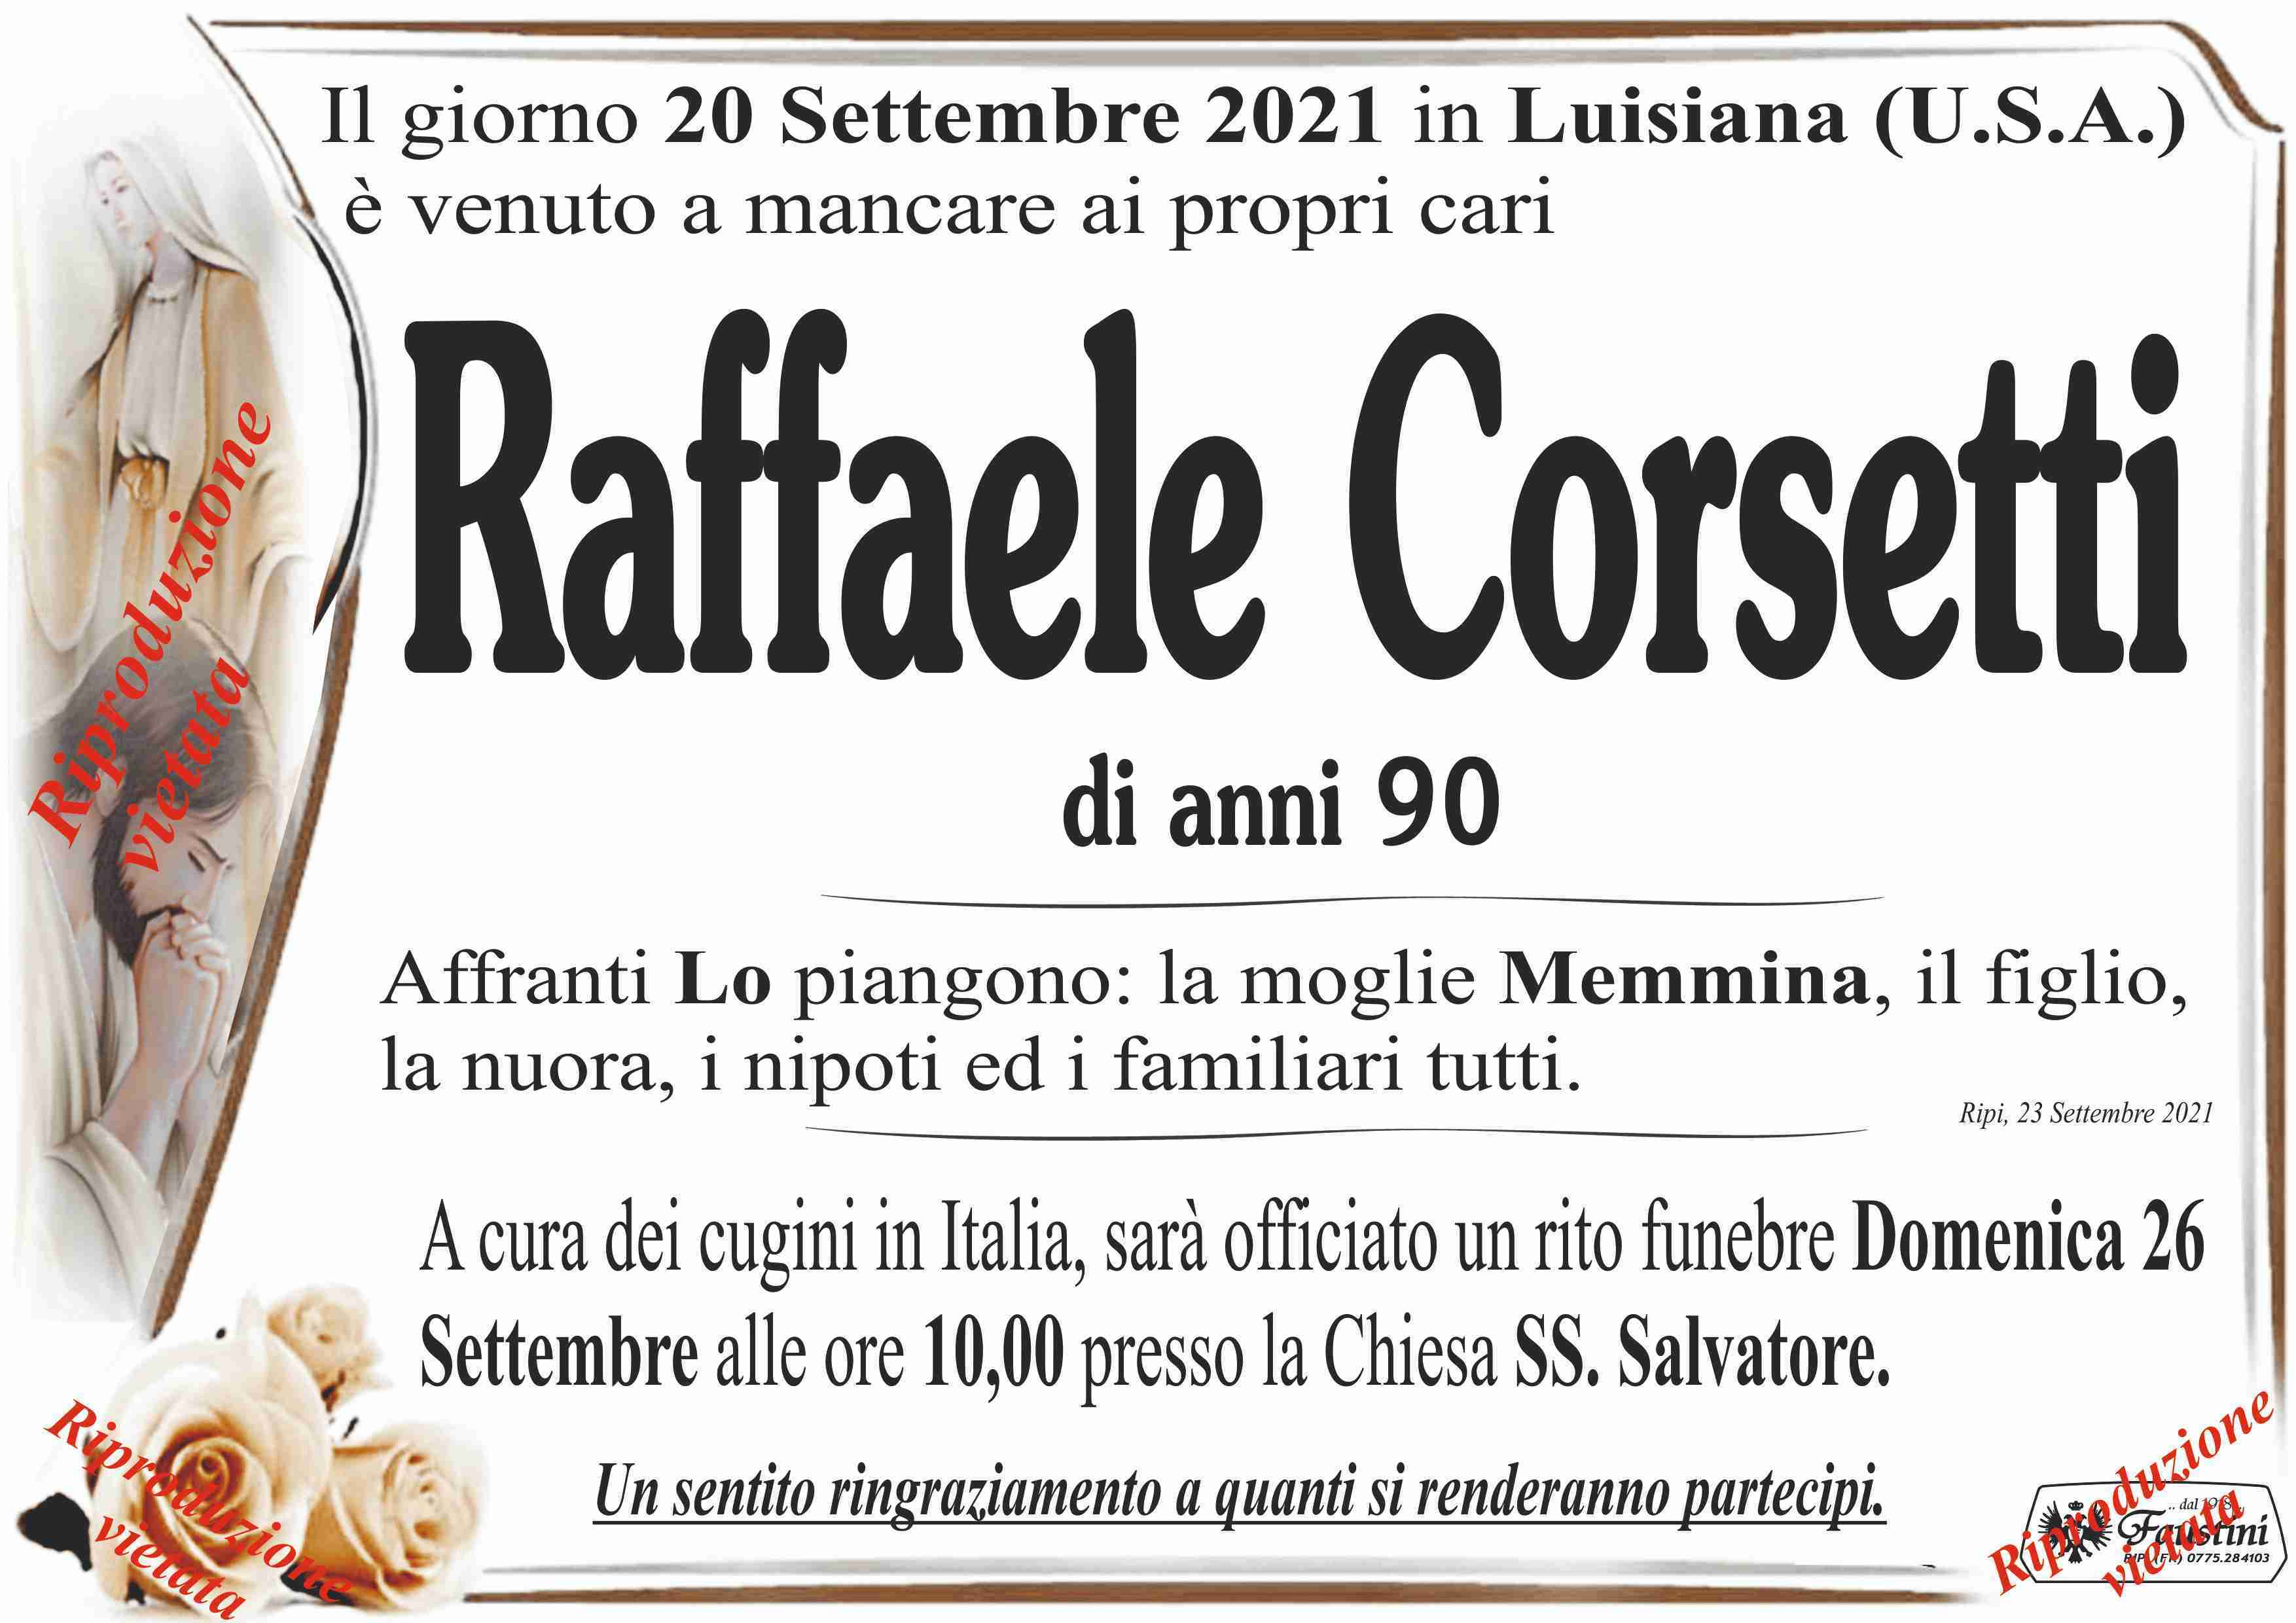 Raffaele Corsetti